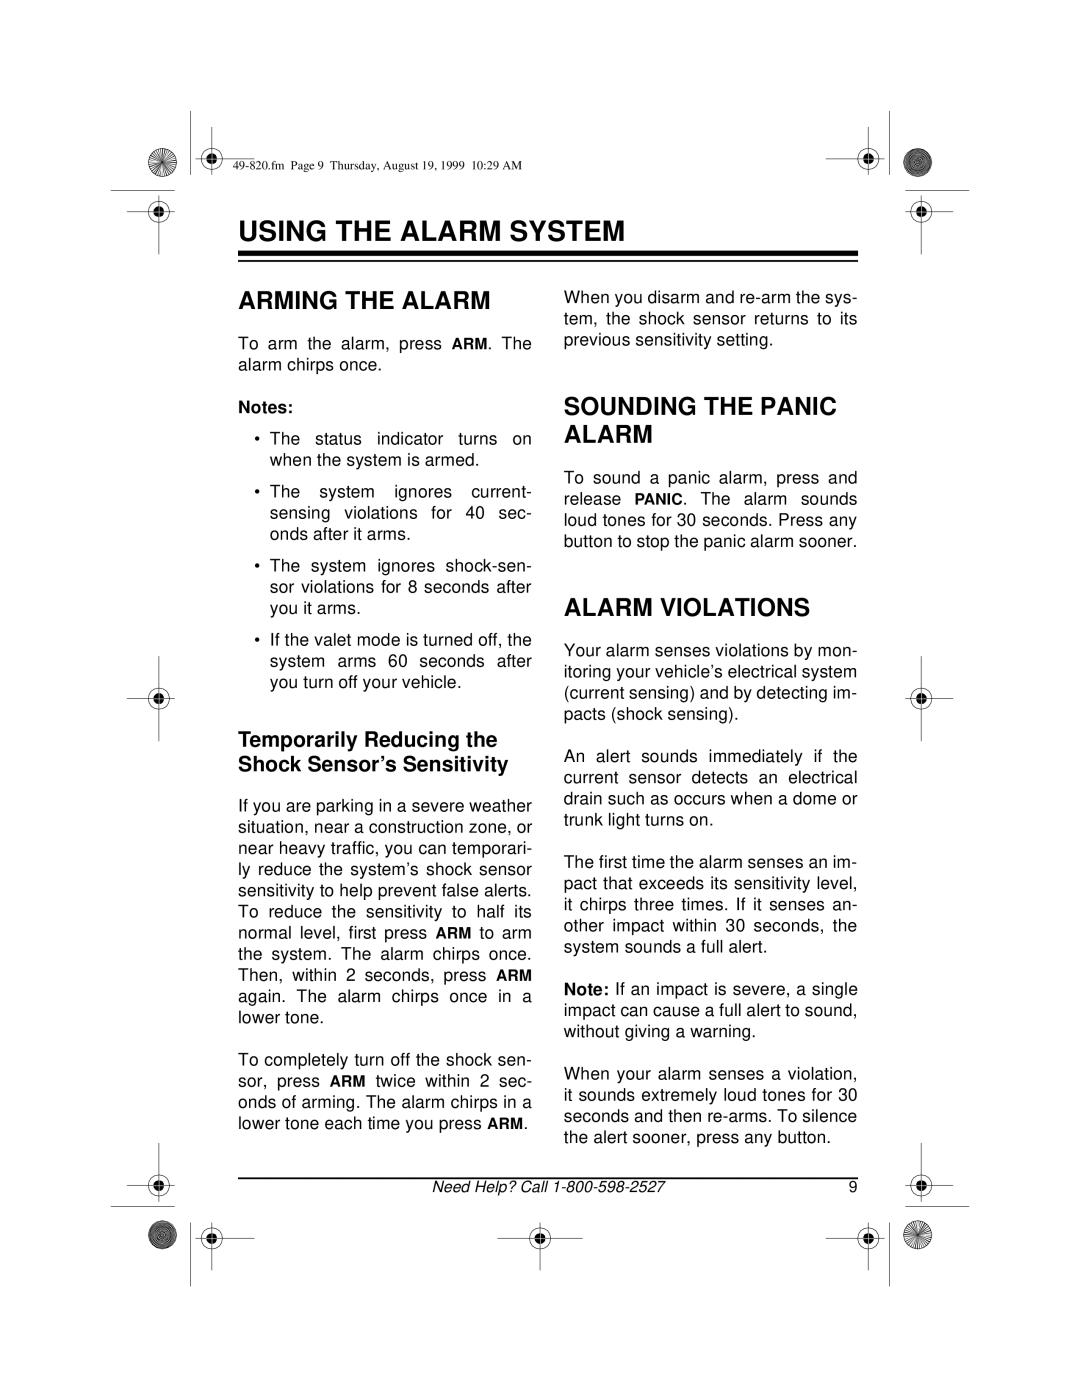 Radio Shack RS-2000 owner manual Using The Alarm System, Arming The Alarm, Sounding The Panic Alarm, Alarm Violations 